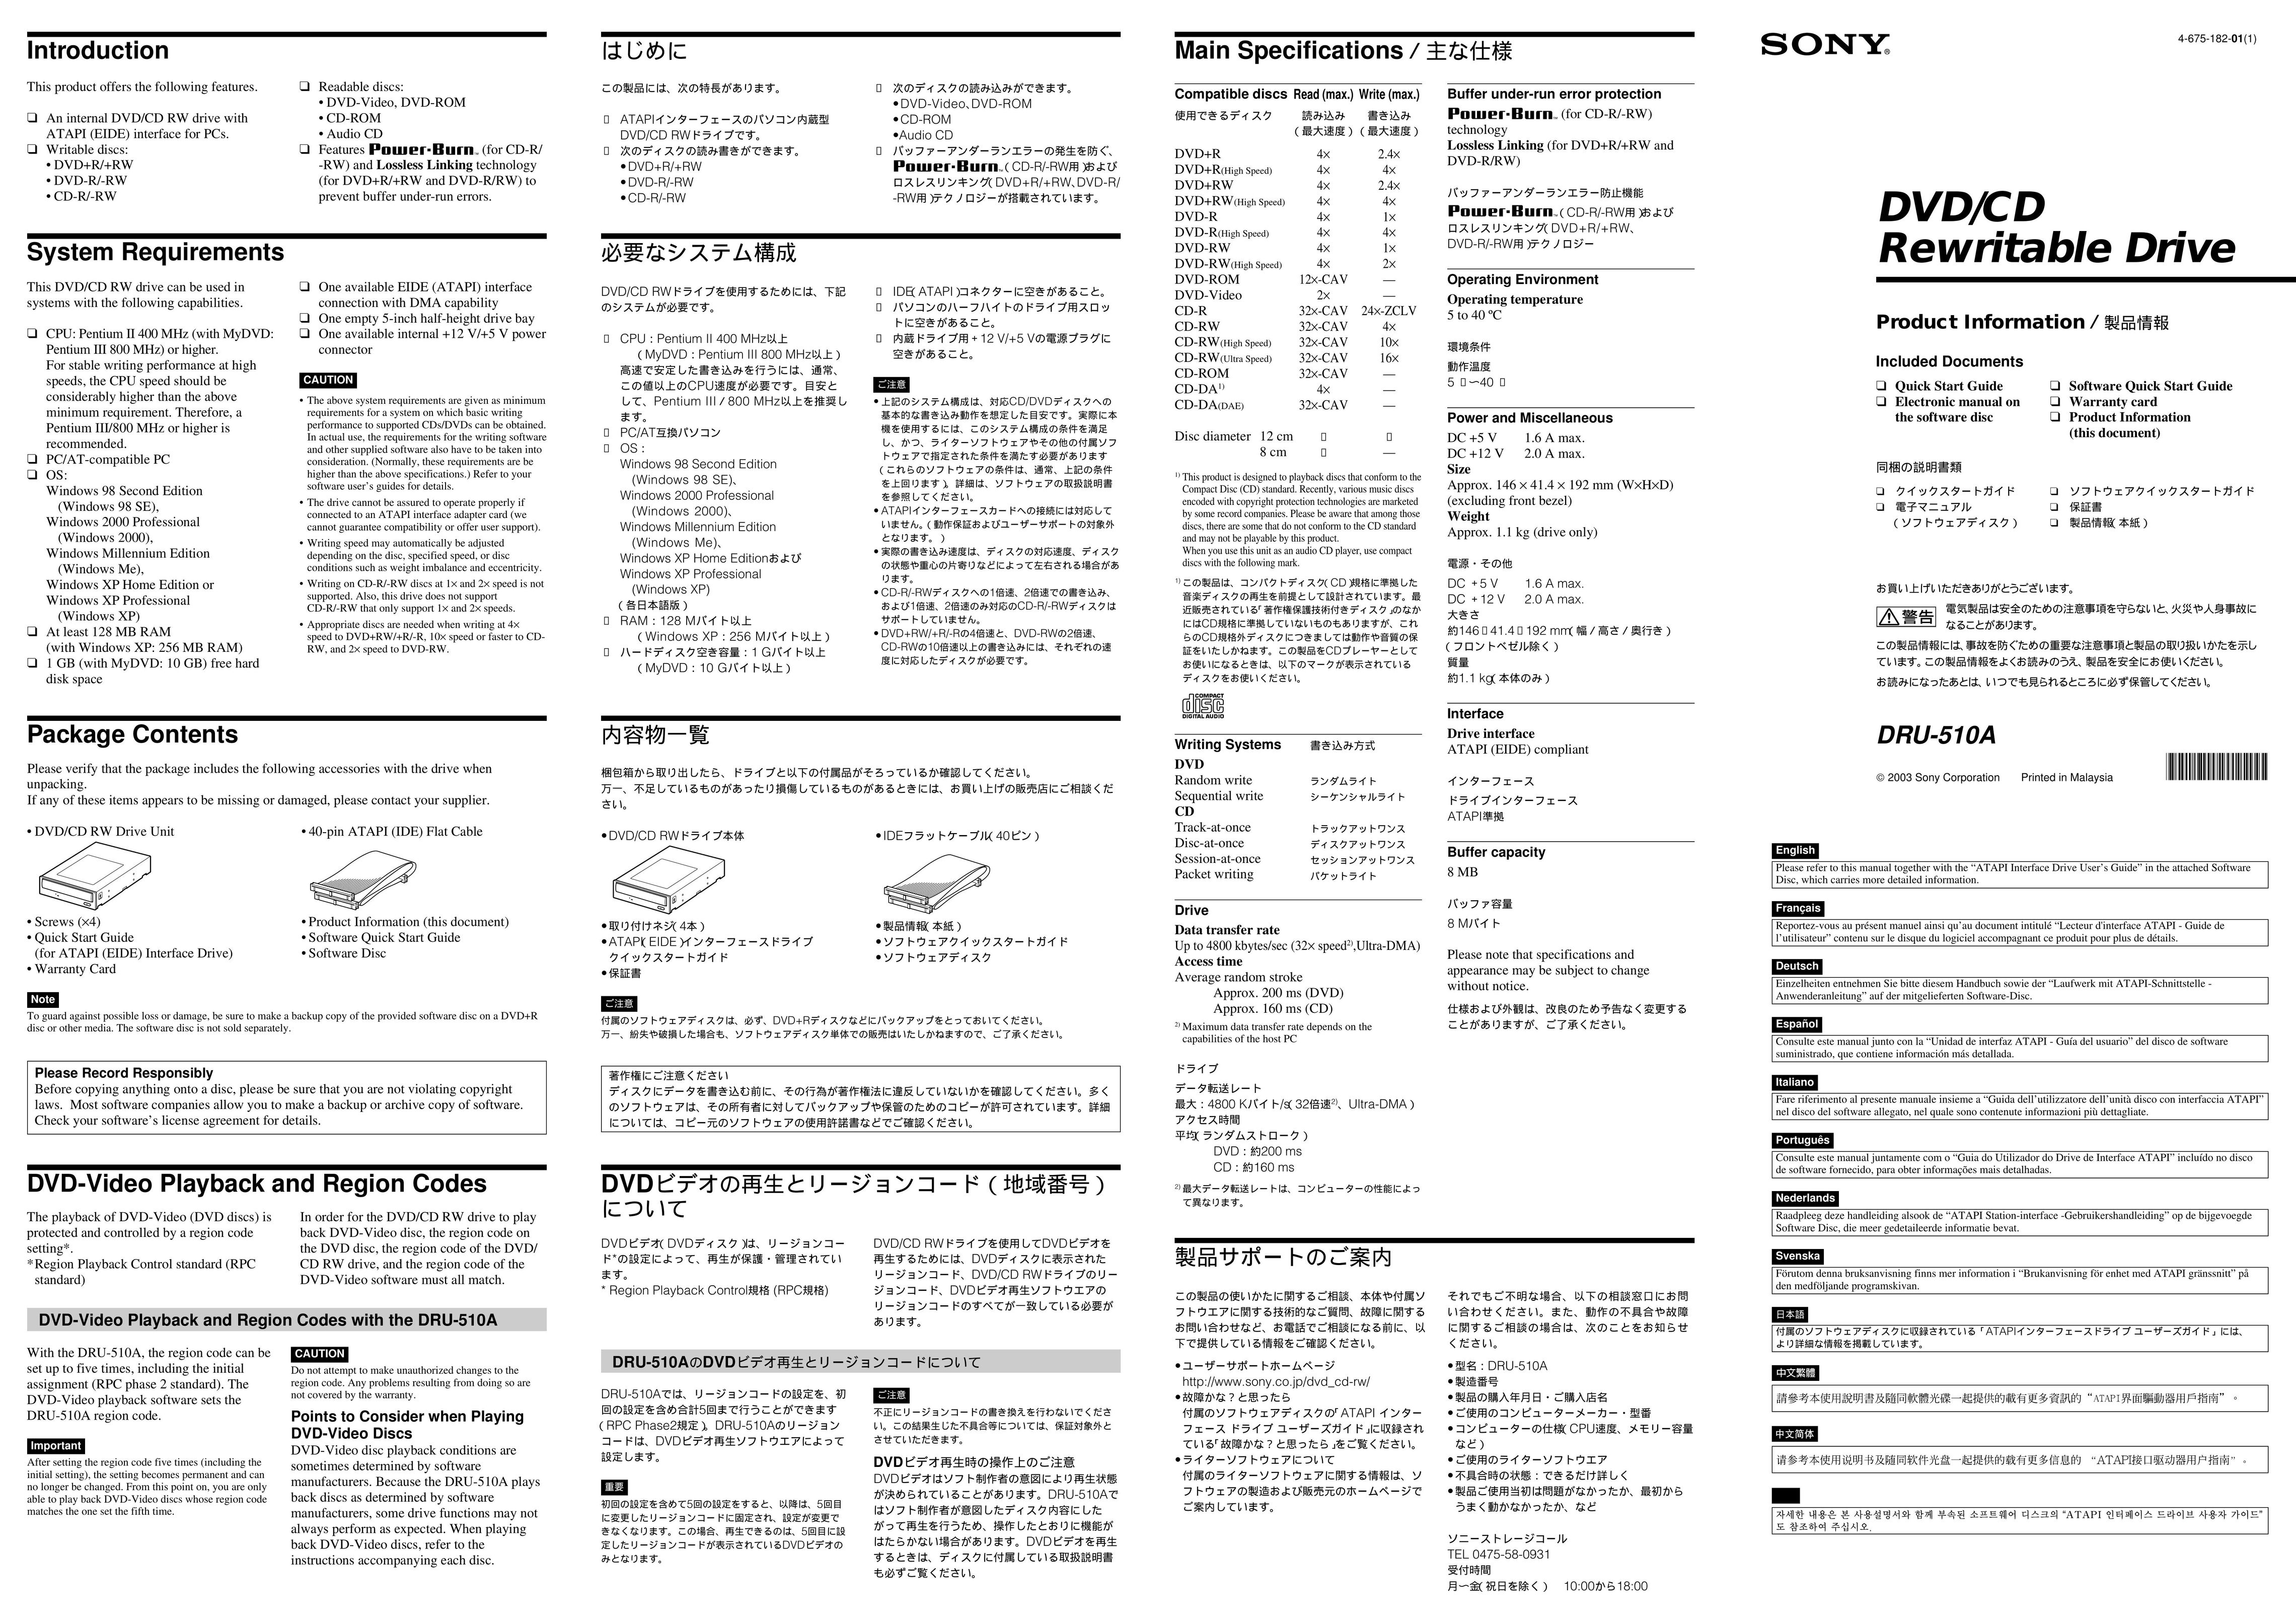 Sony DRU-510A Computer Drive User Manual